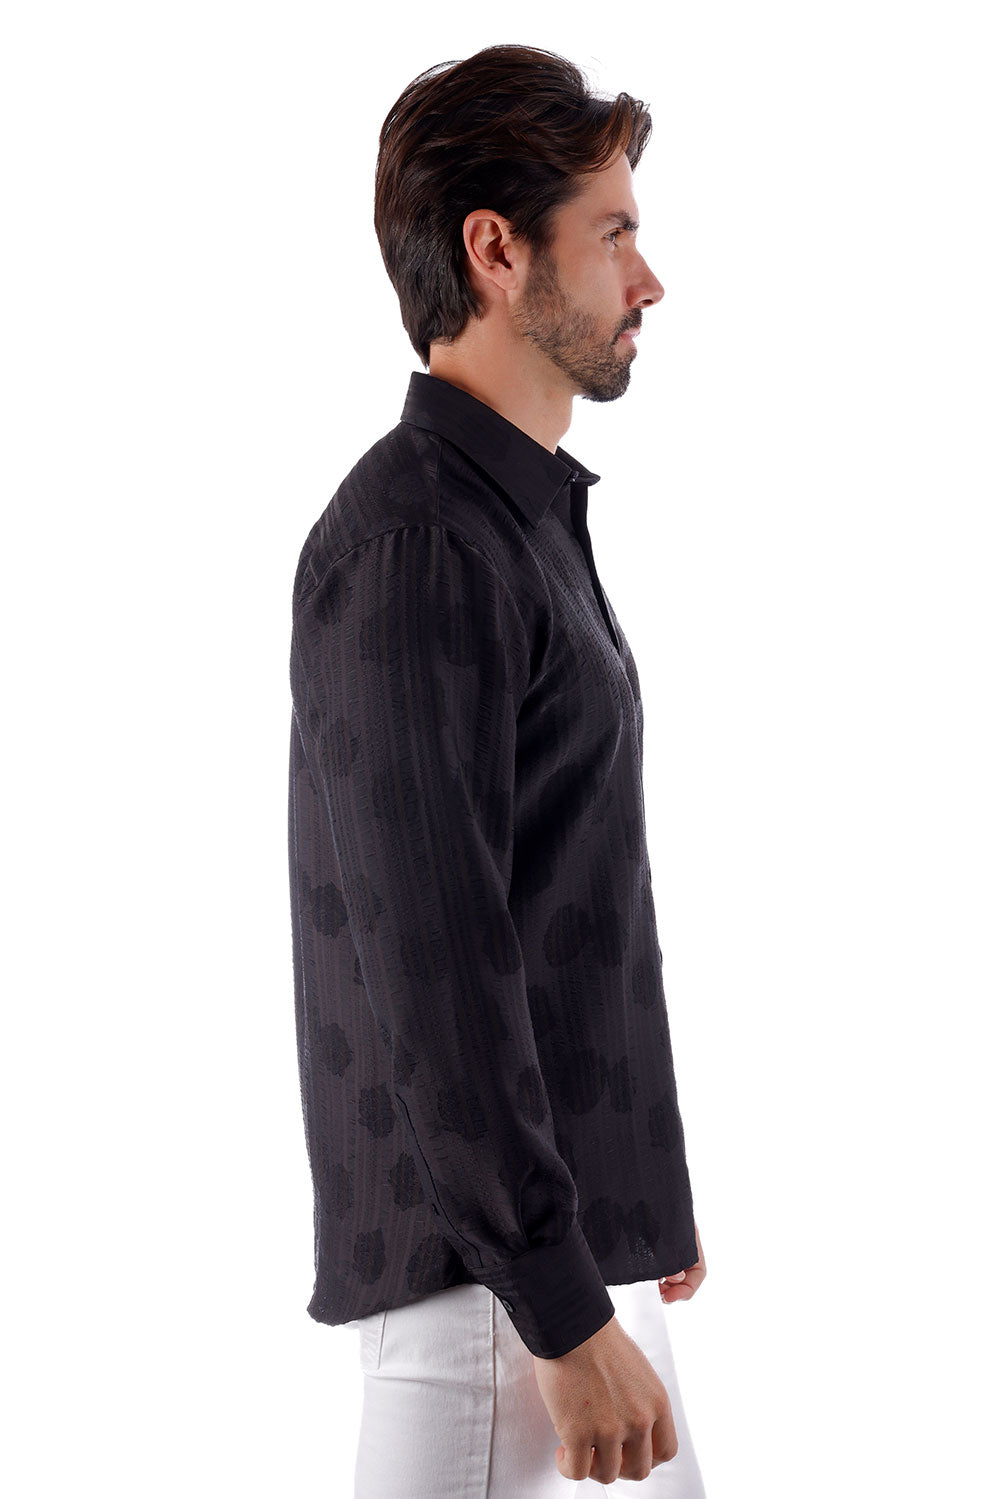 BARABAS Men's Floral Rose Button Down Long Sleeve Shirt 4B31 Black